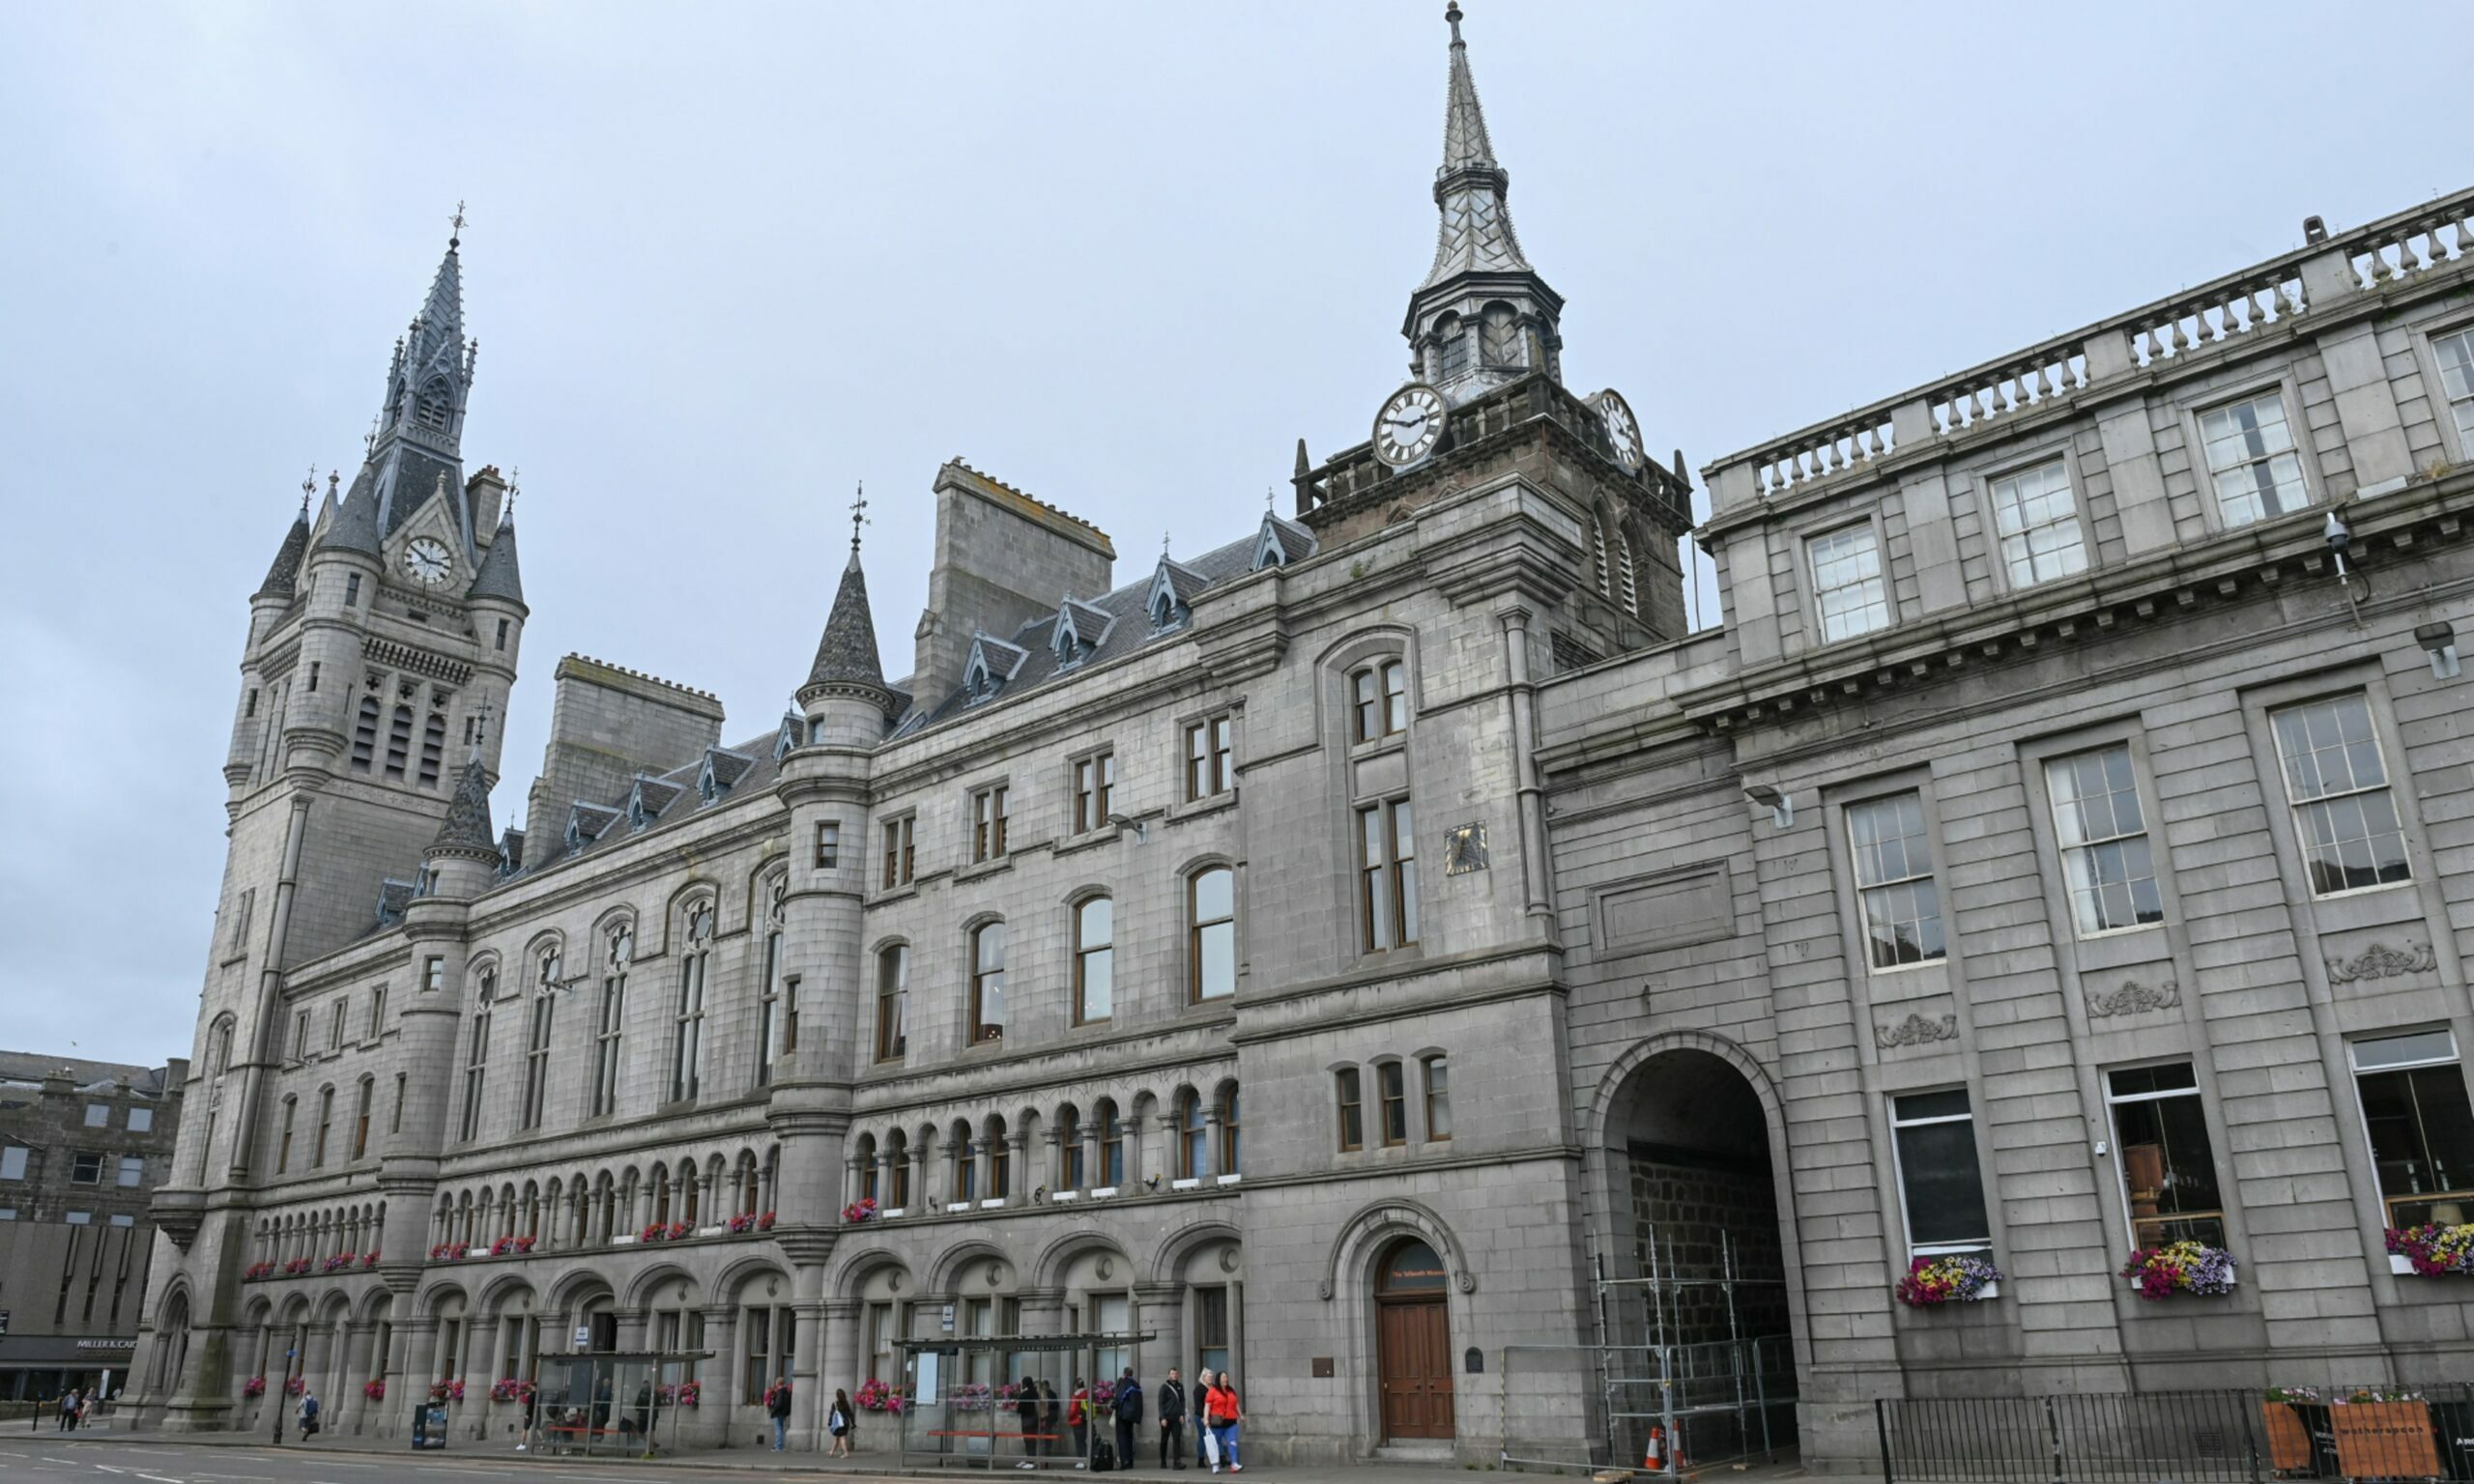 Tolbooth Museum in Aberdeen